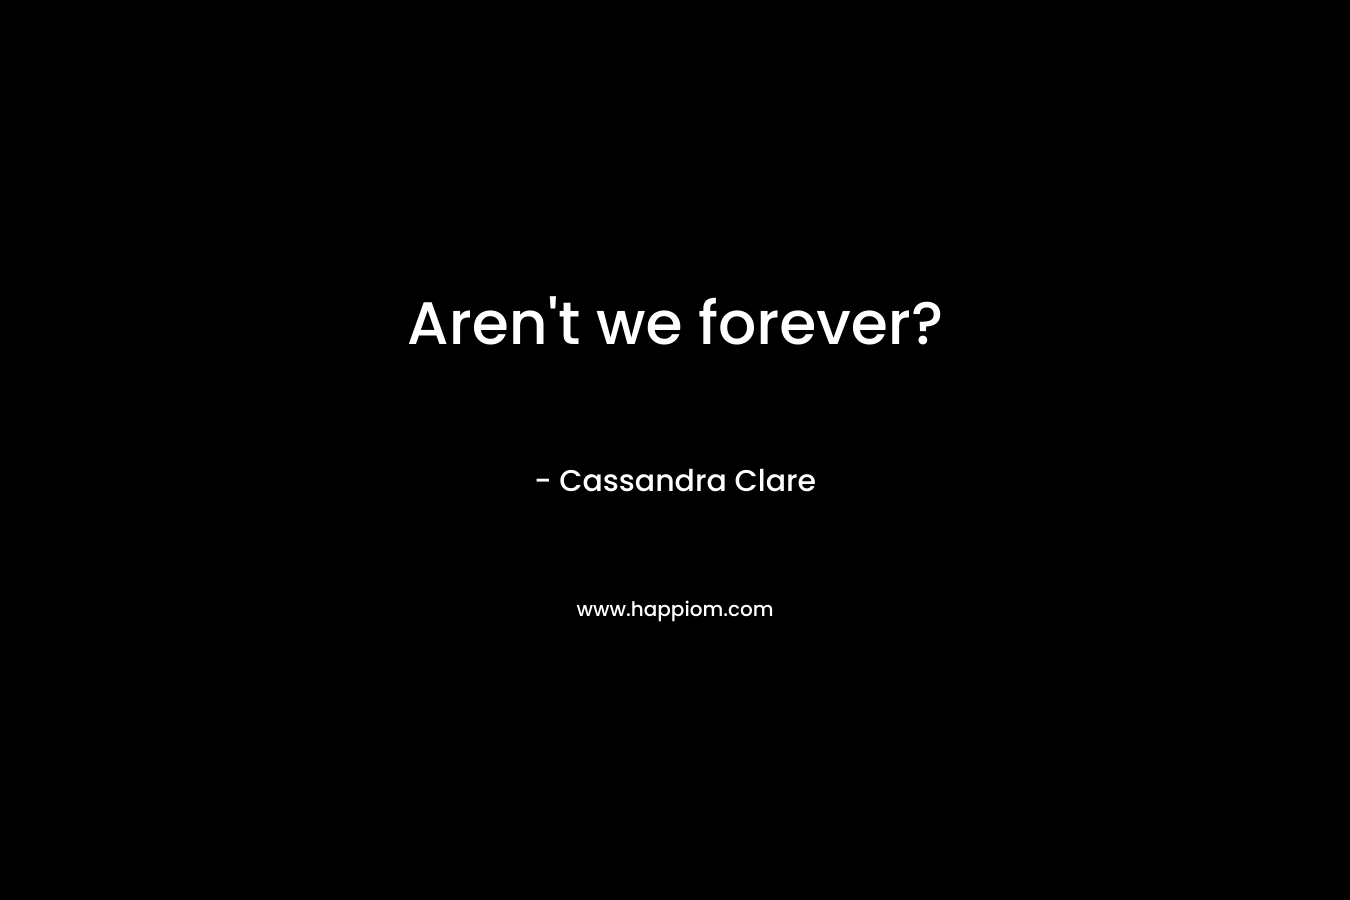 Aren't we forever?